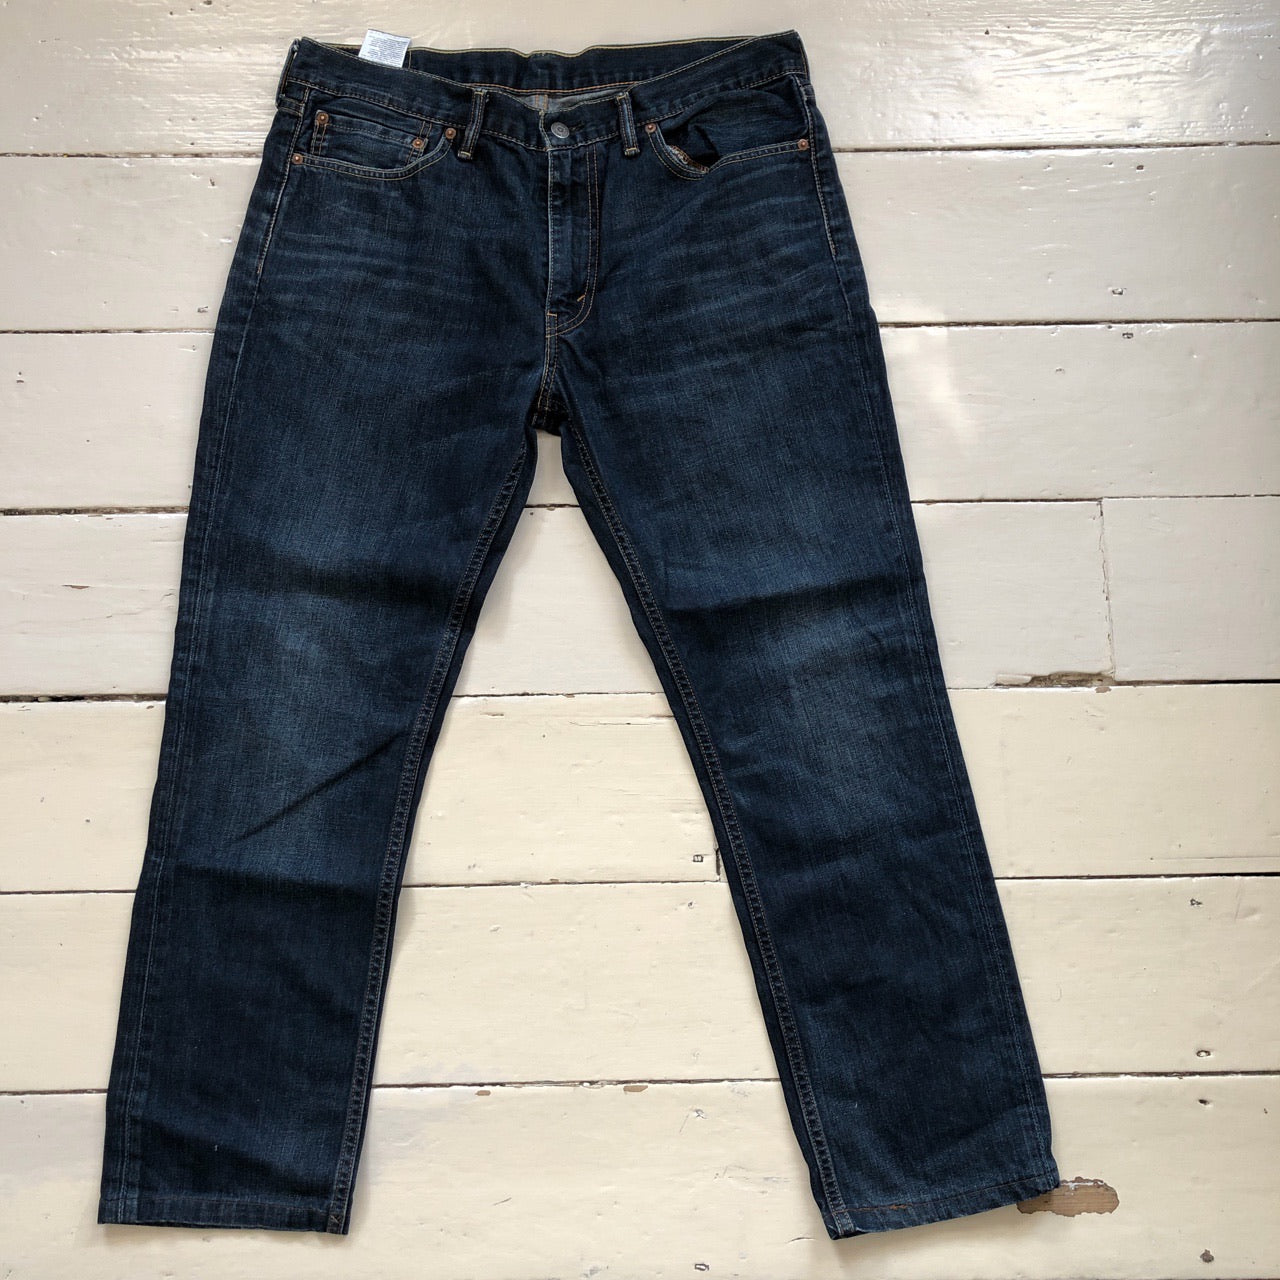 Levis 511 Slim Navy Jeans (36/29)